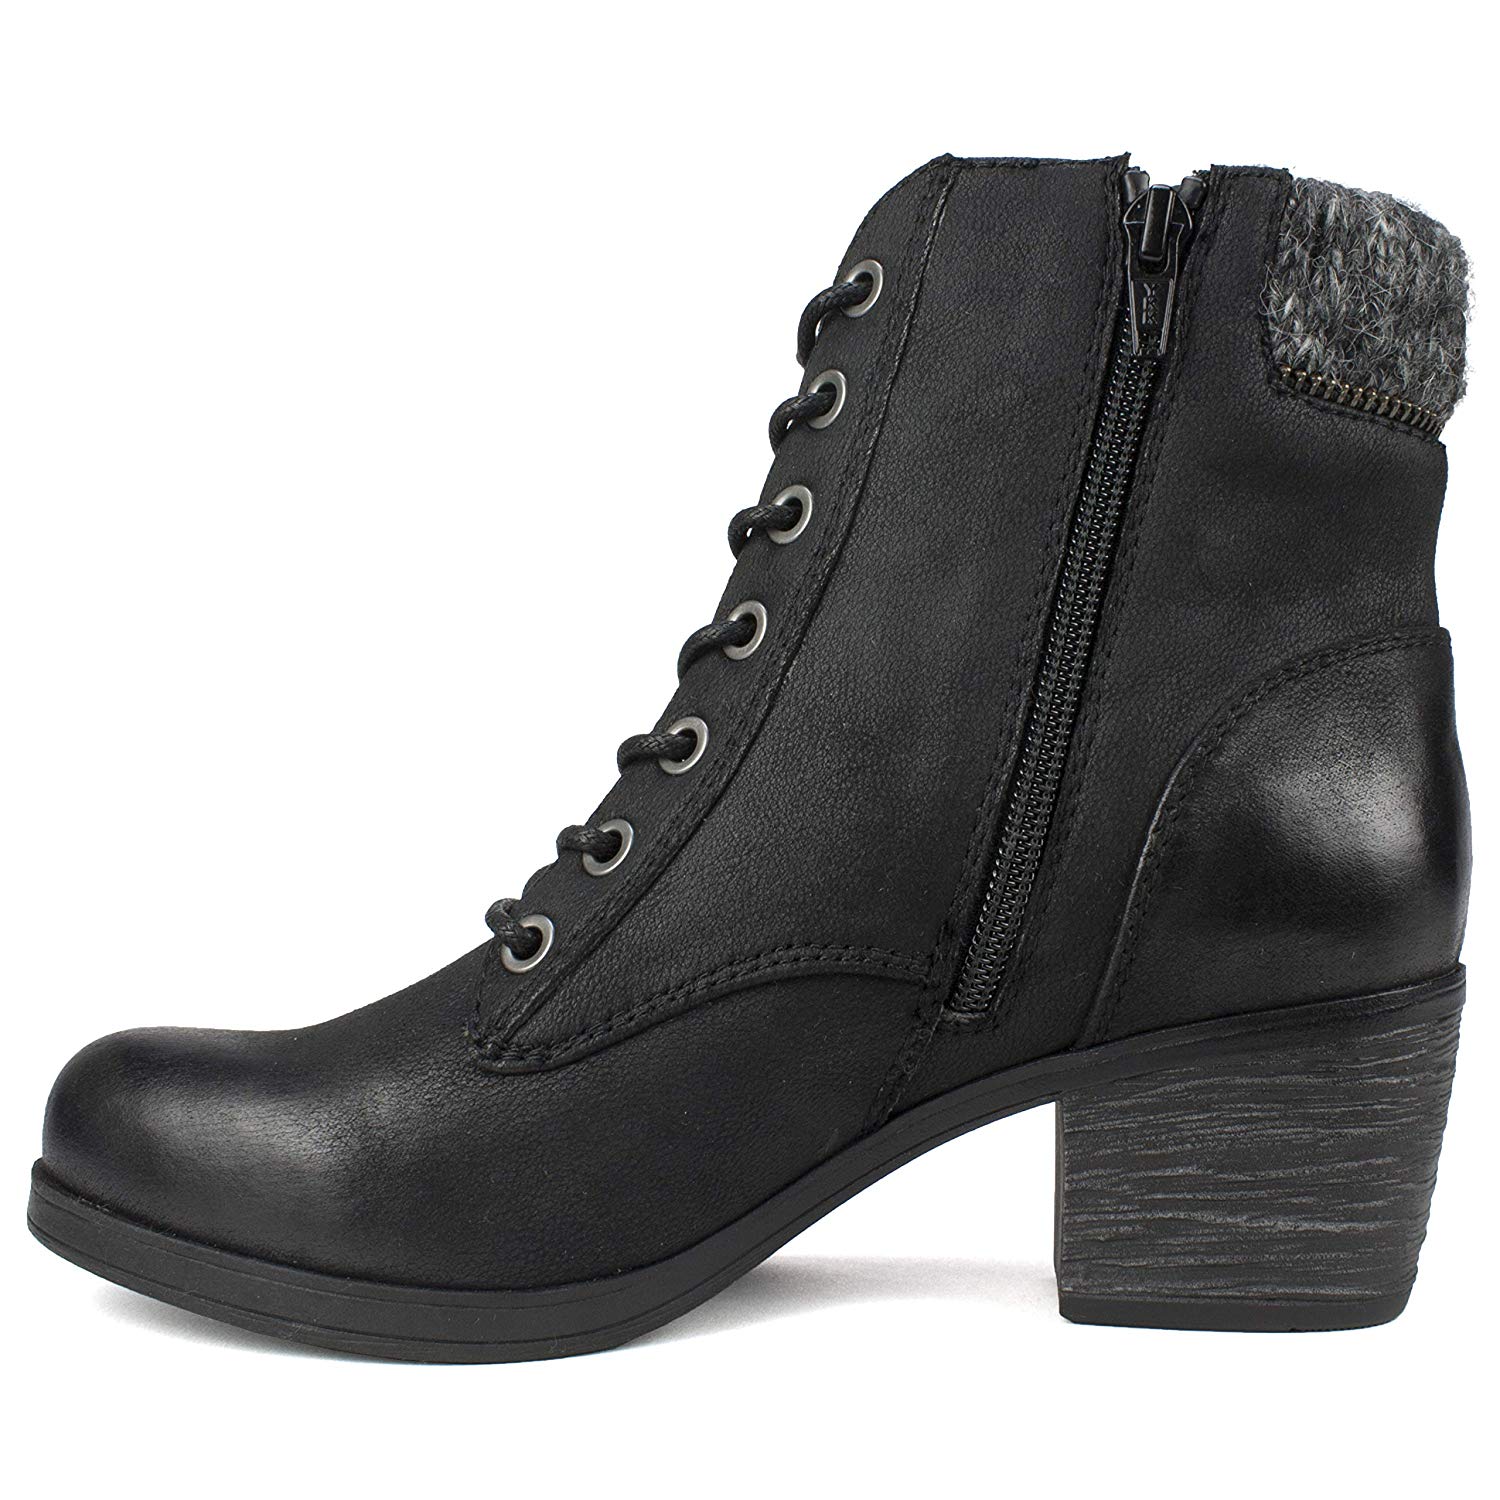 WHITE MOUNTAIN Shoes Stuart Women's Boot, Black, Size 9.0 | eBay